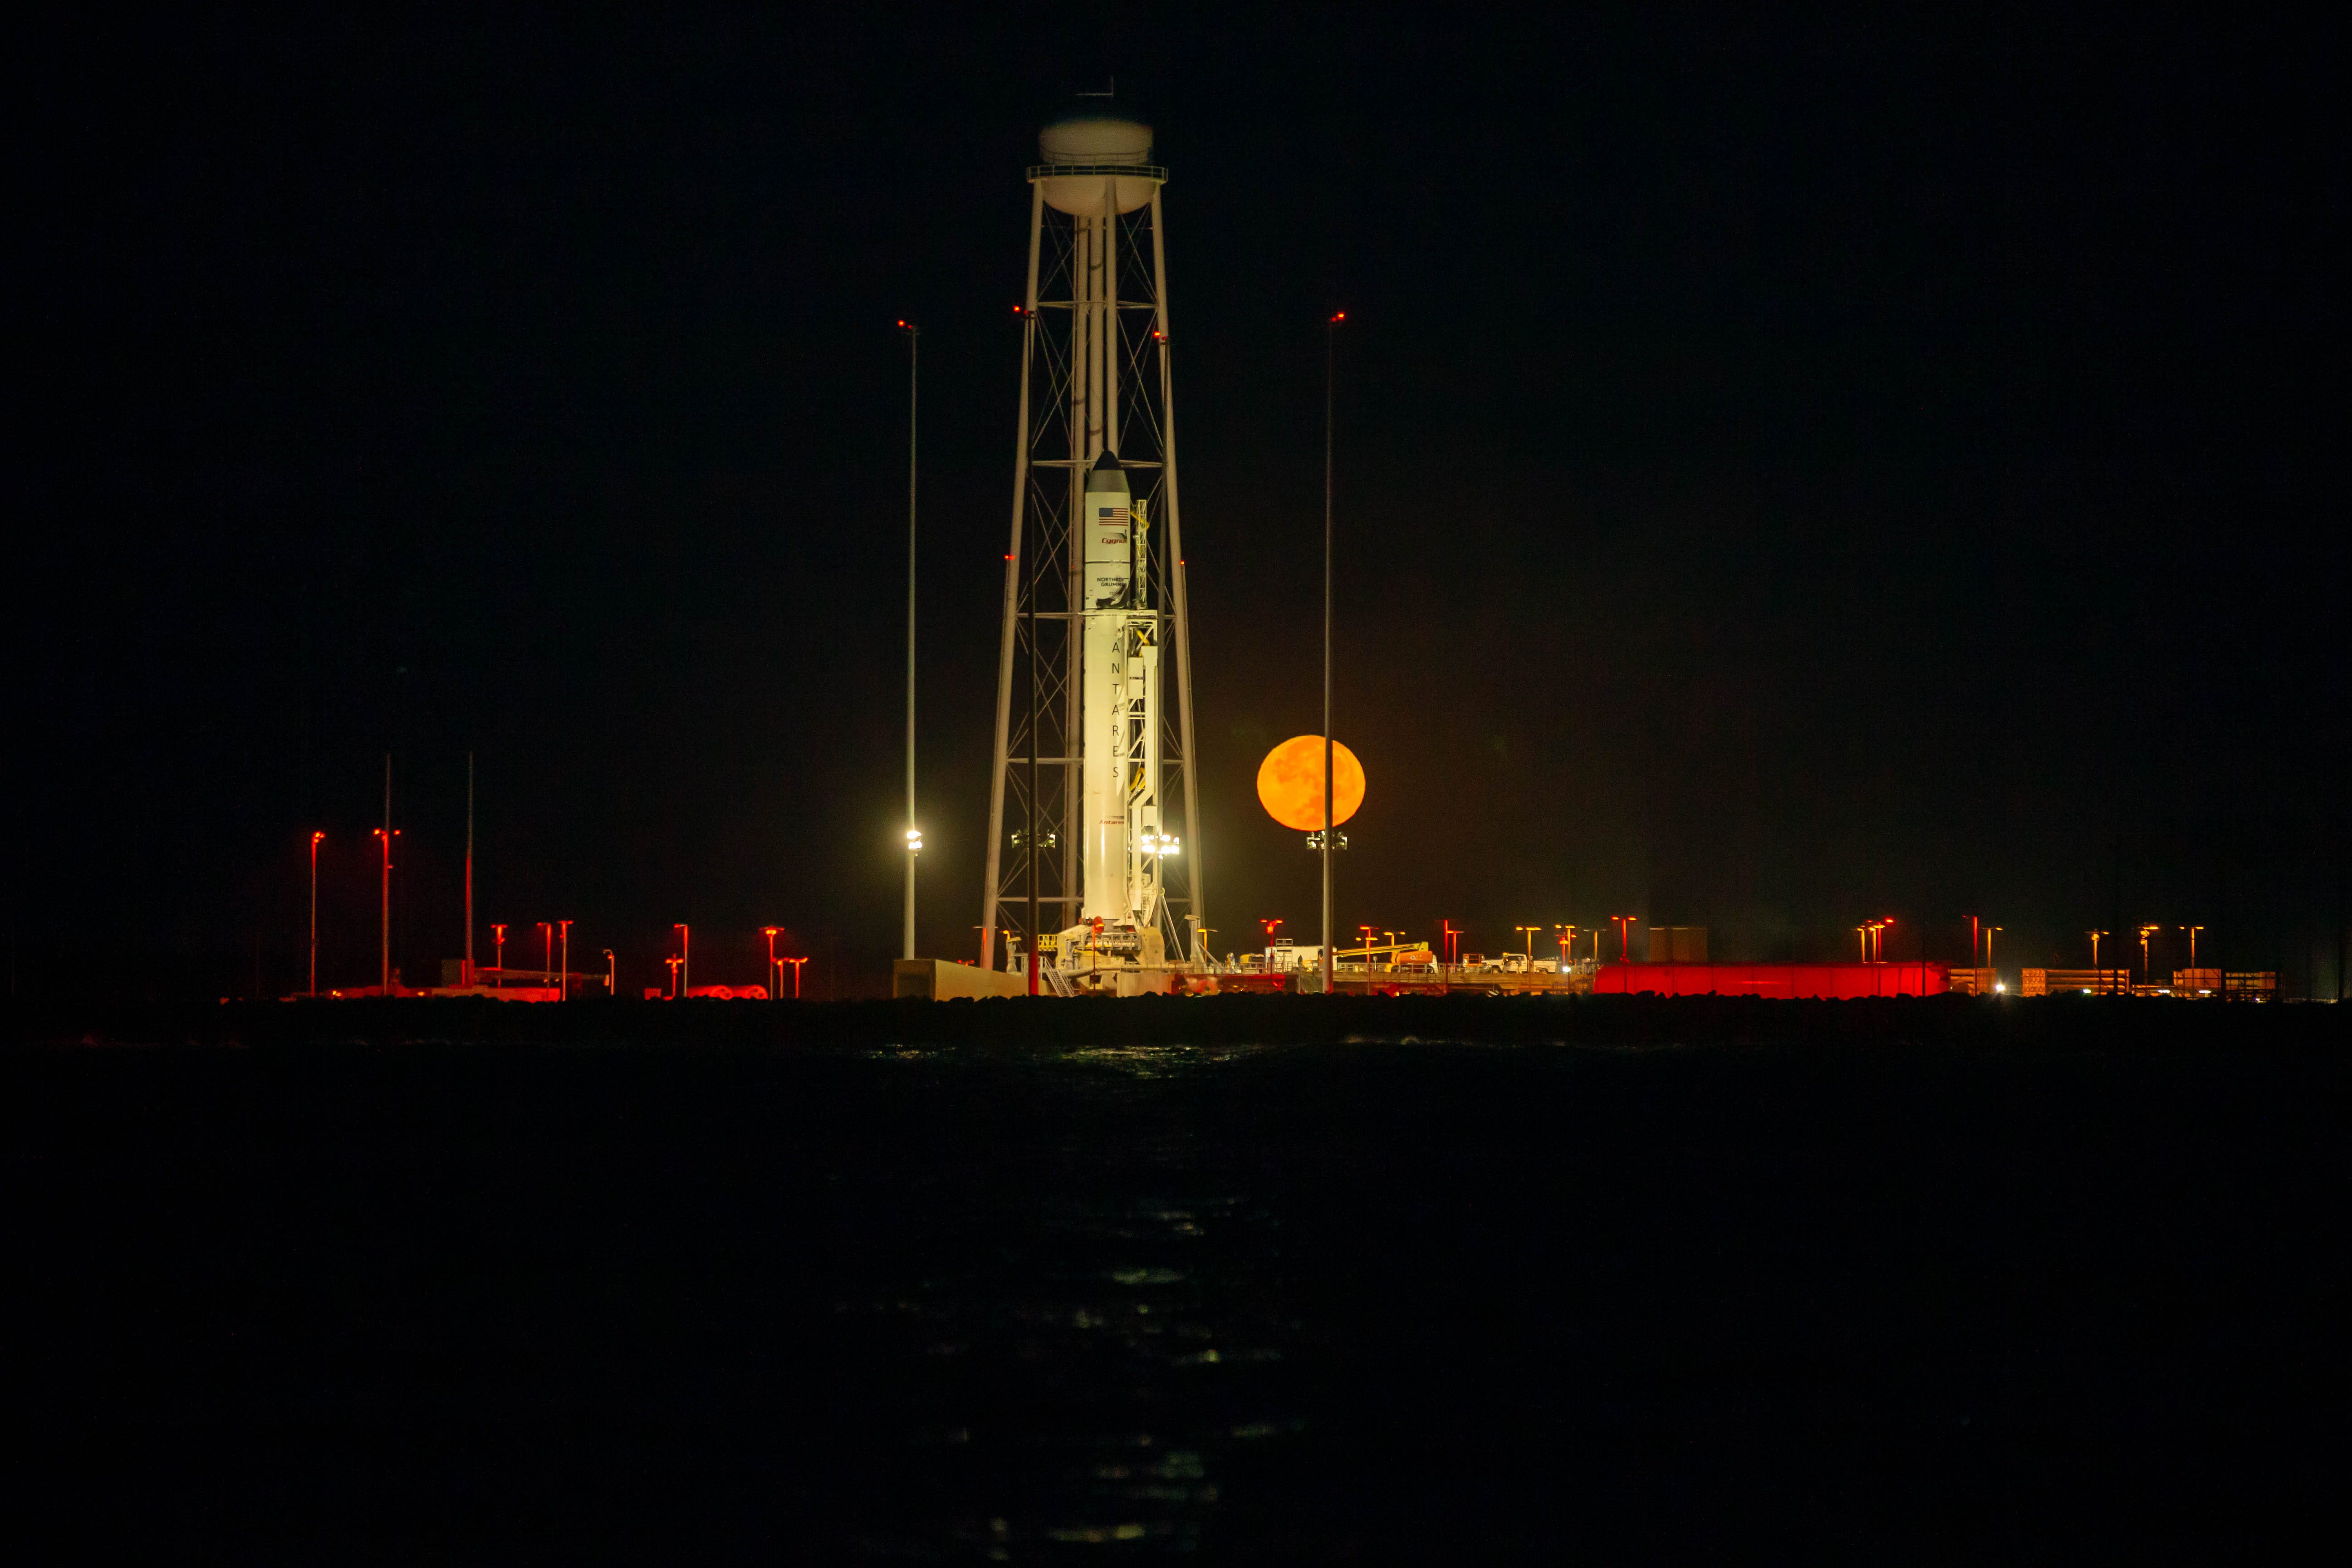 wallops island rocket launch schedule 2020